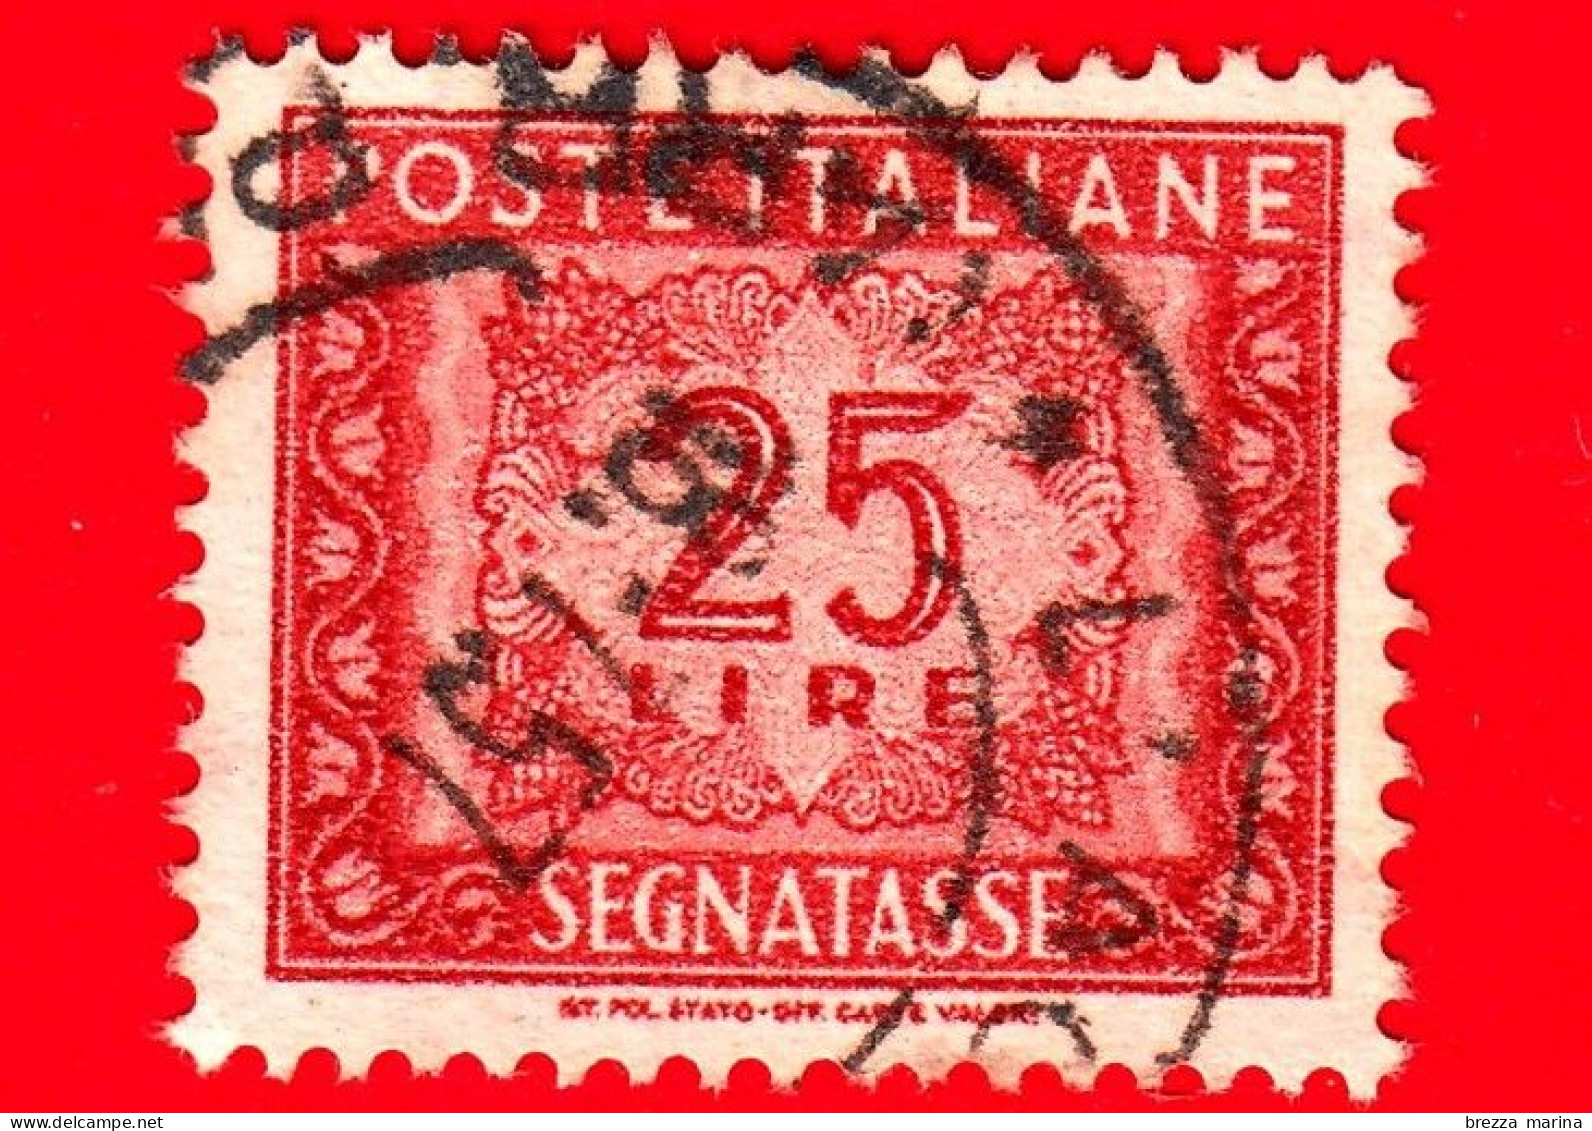 ITALIA - Usato - 1955 - Segnatasse - Cifra E Decorazioni, Filigrana Stella - 25 L. • - Segnatasse